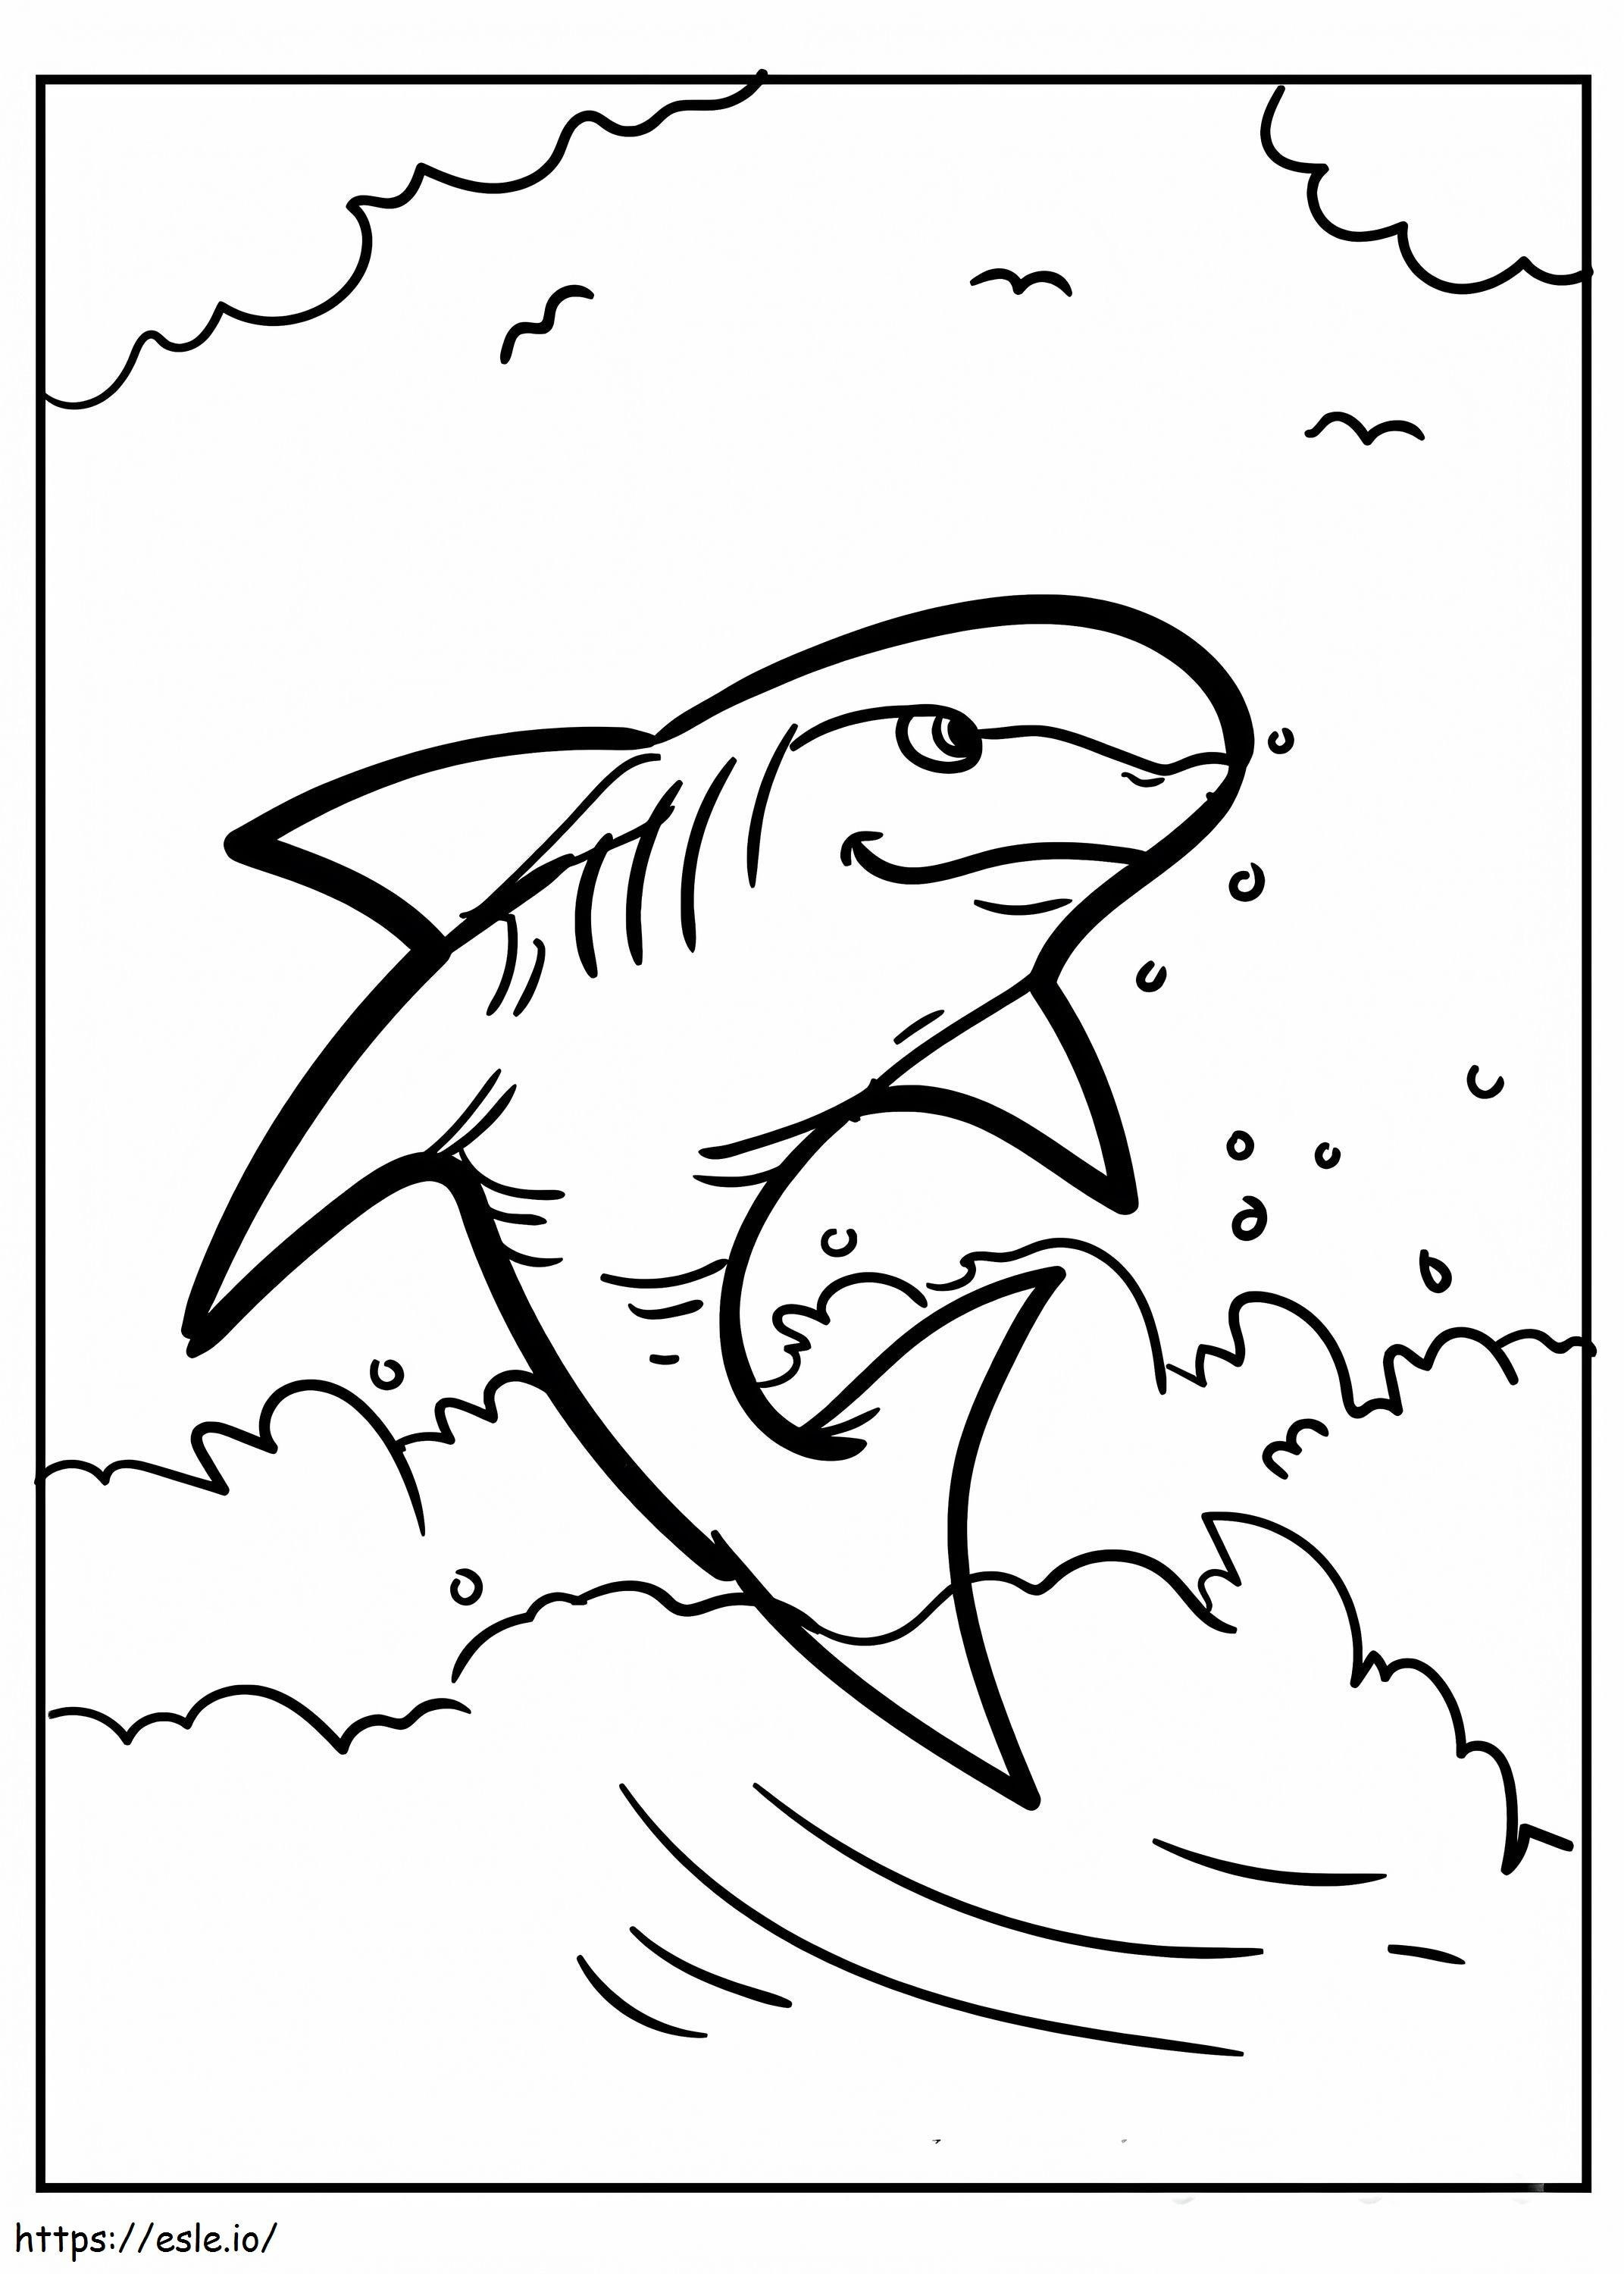 Tiburon Genial coloring page